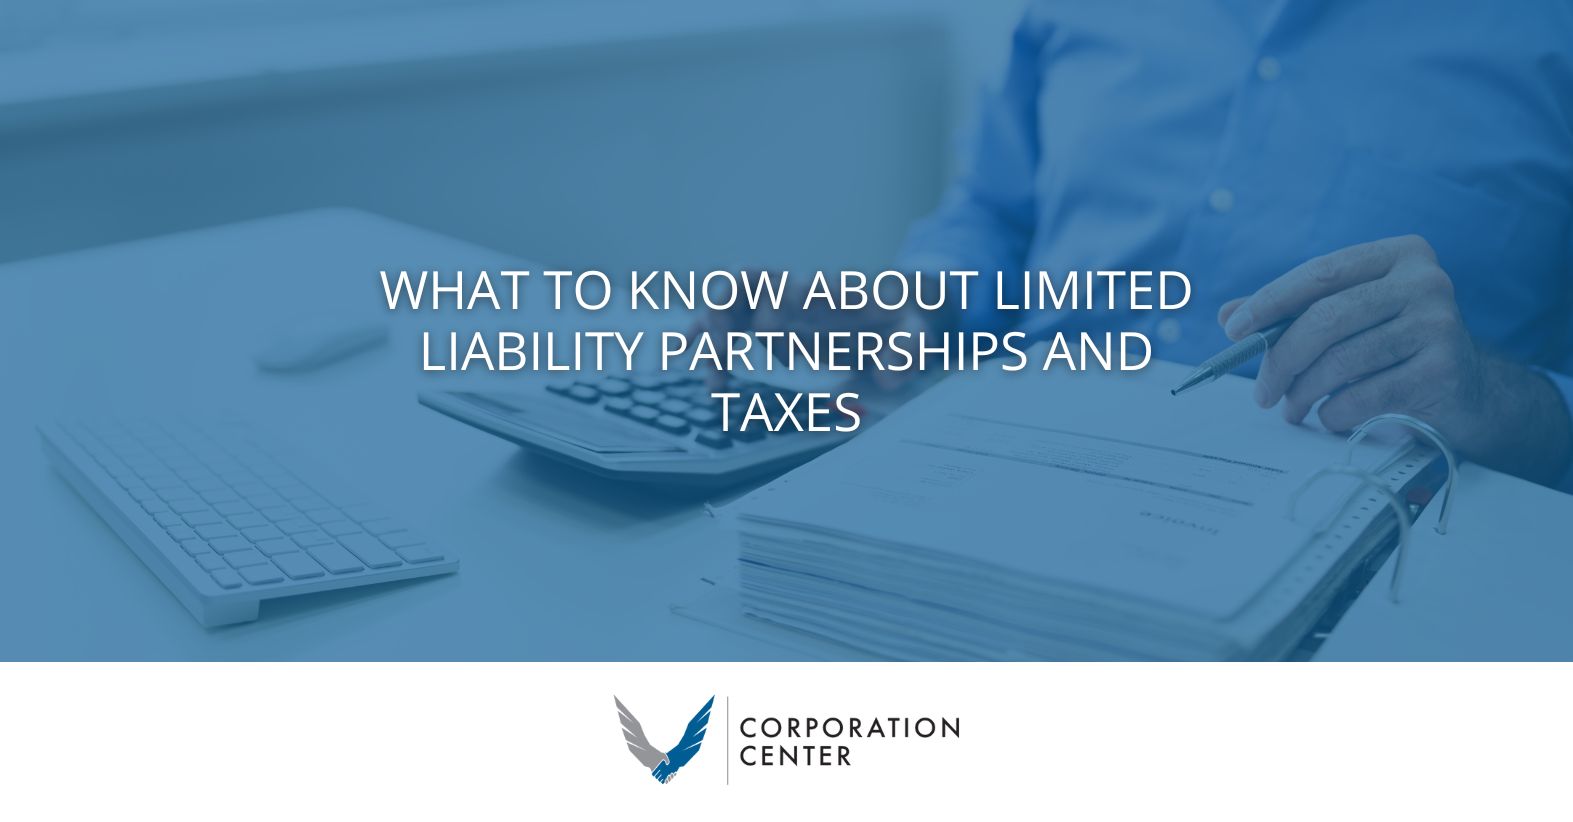 Limited Liability Partnerships